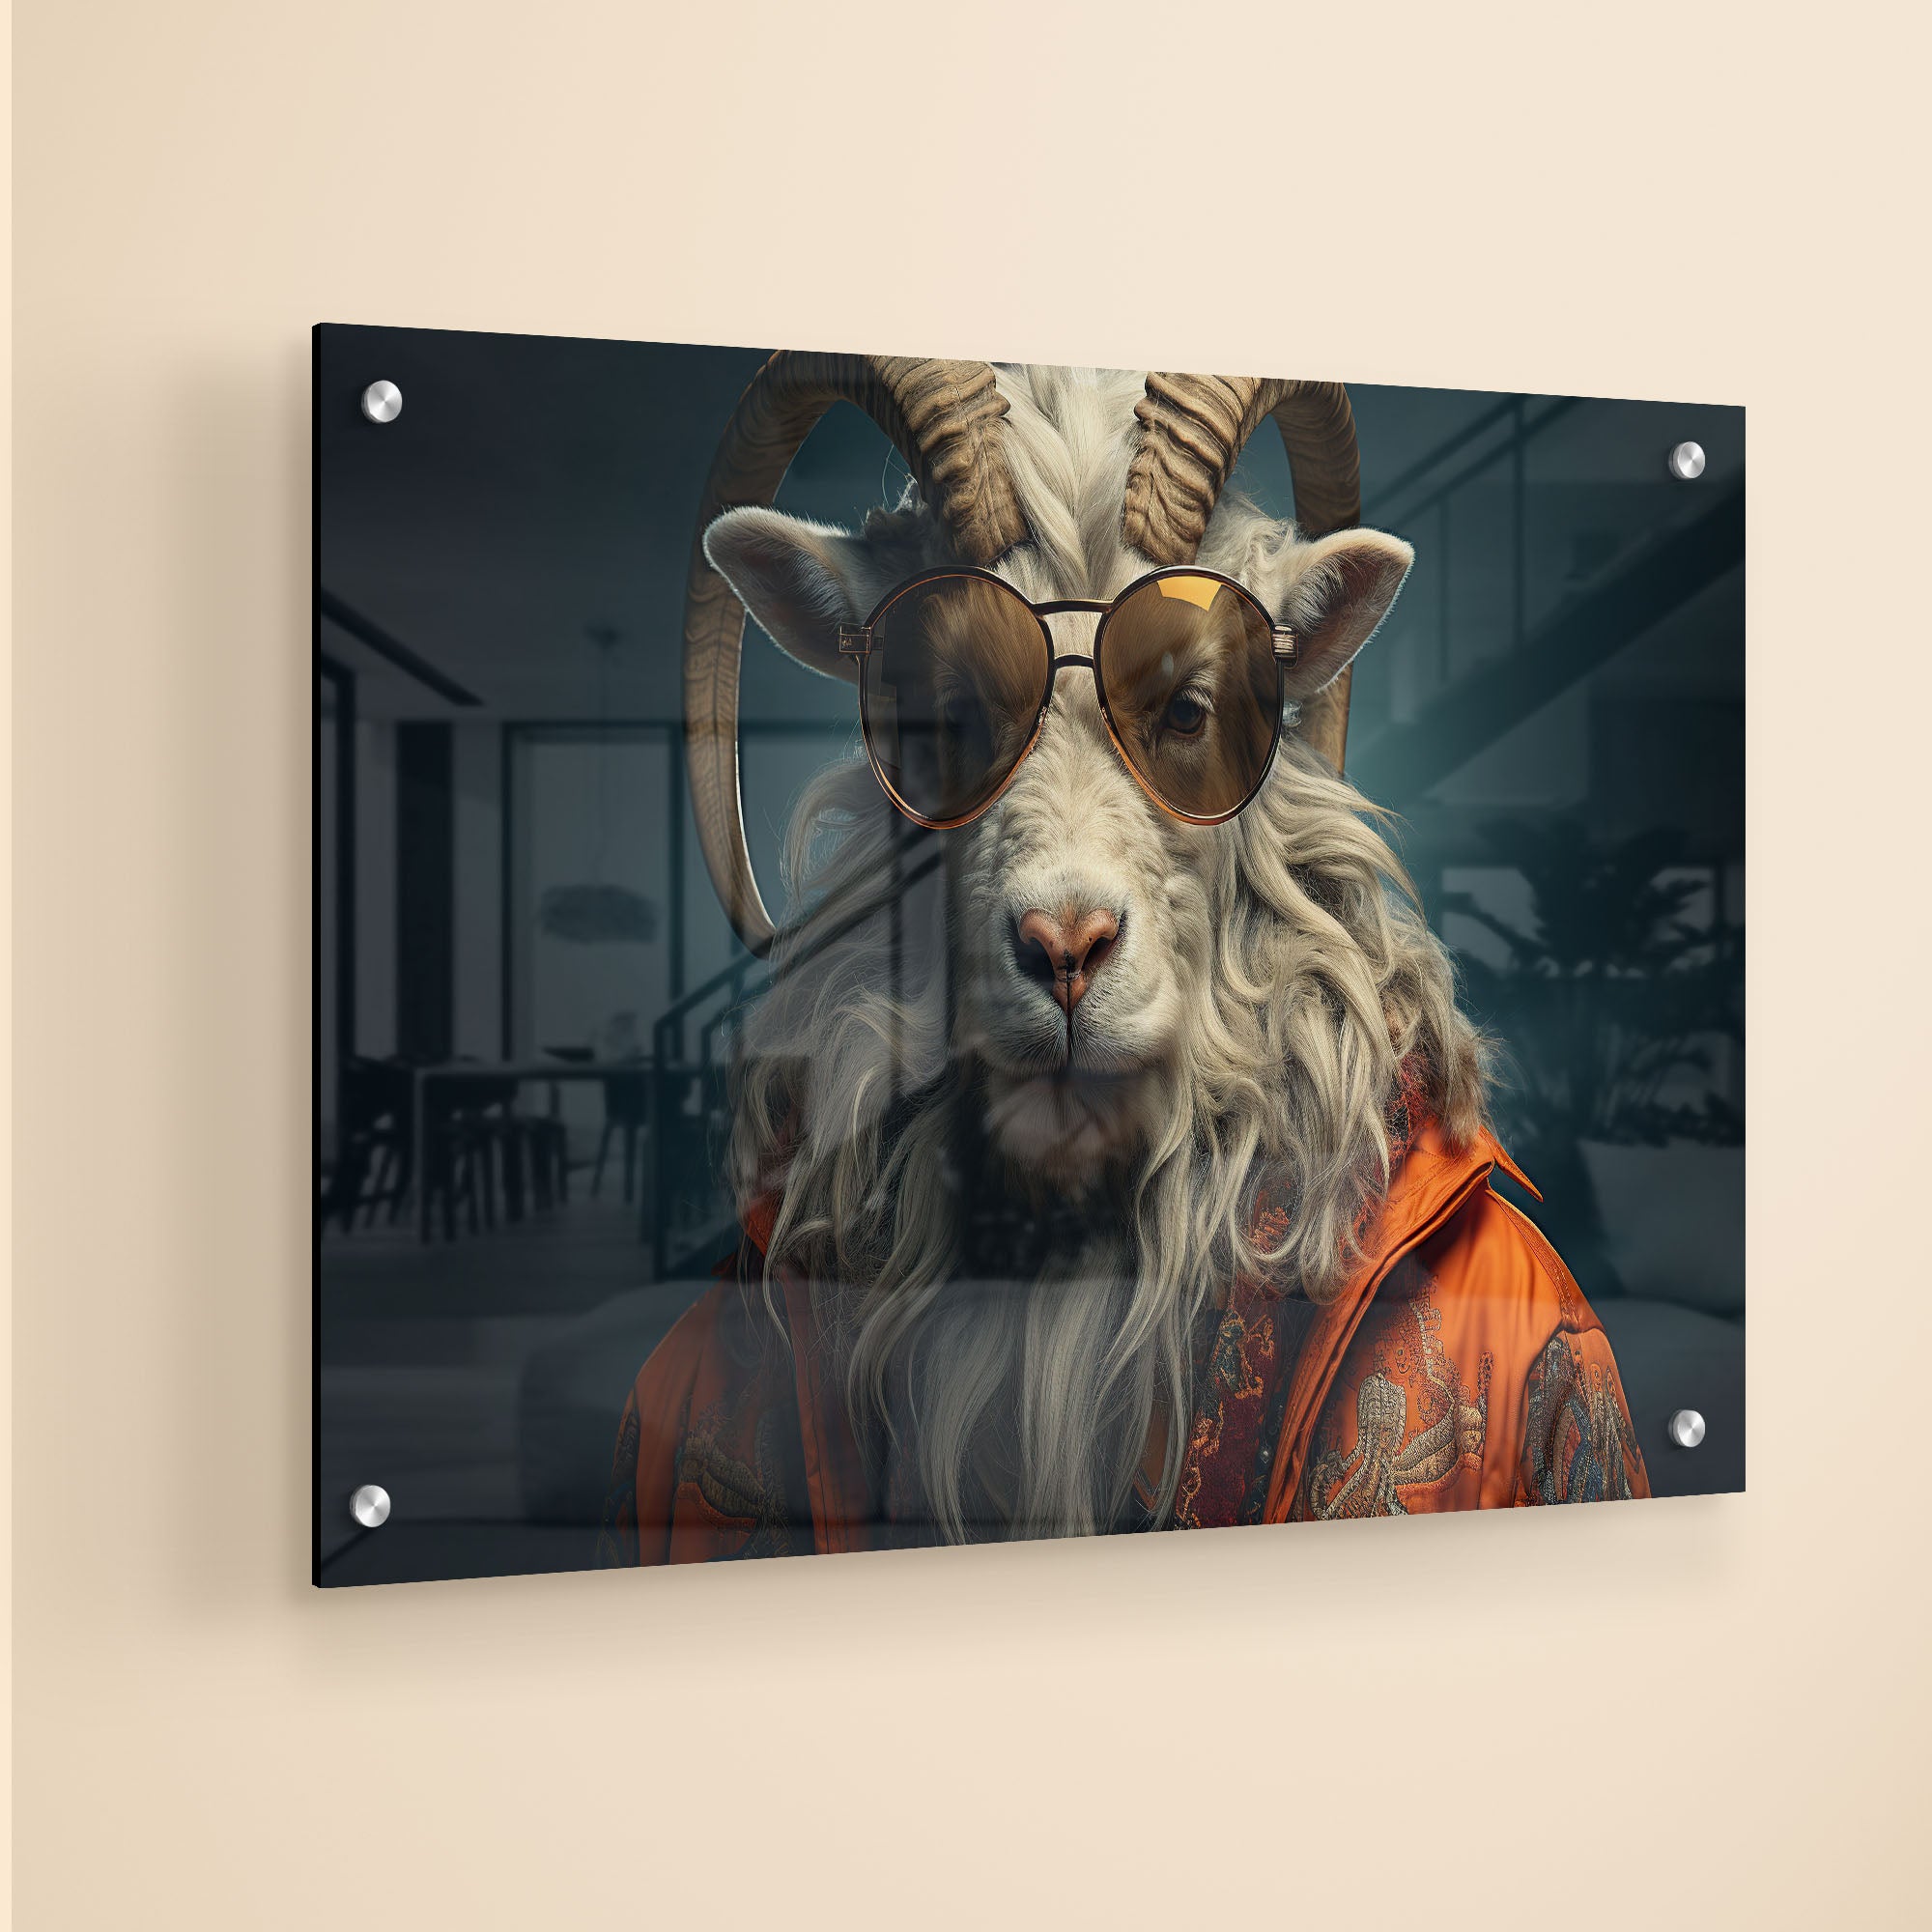 Gentle Goat Acrylic Wall Painting